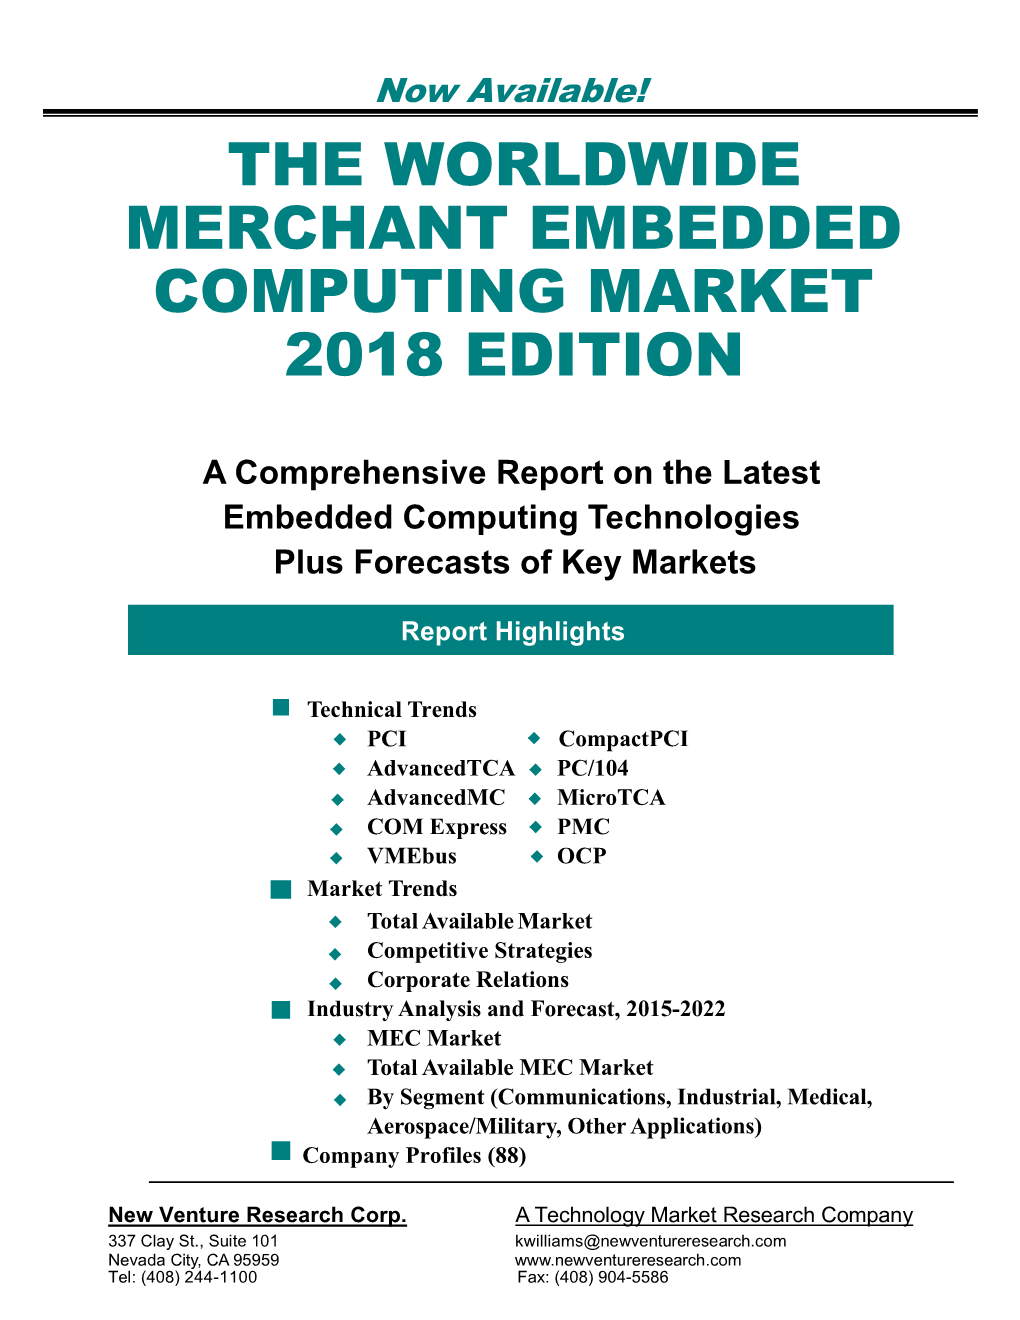 The Worldwide Merchant Embedded Computing Market 2018 Edition